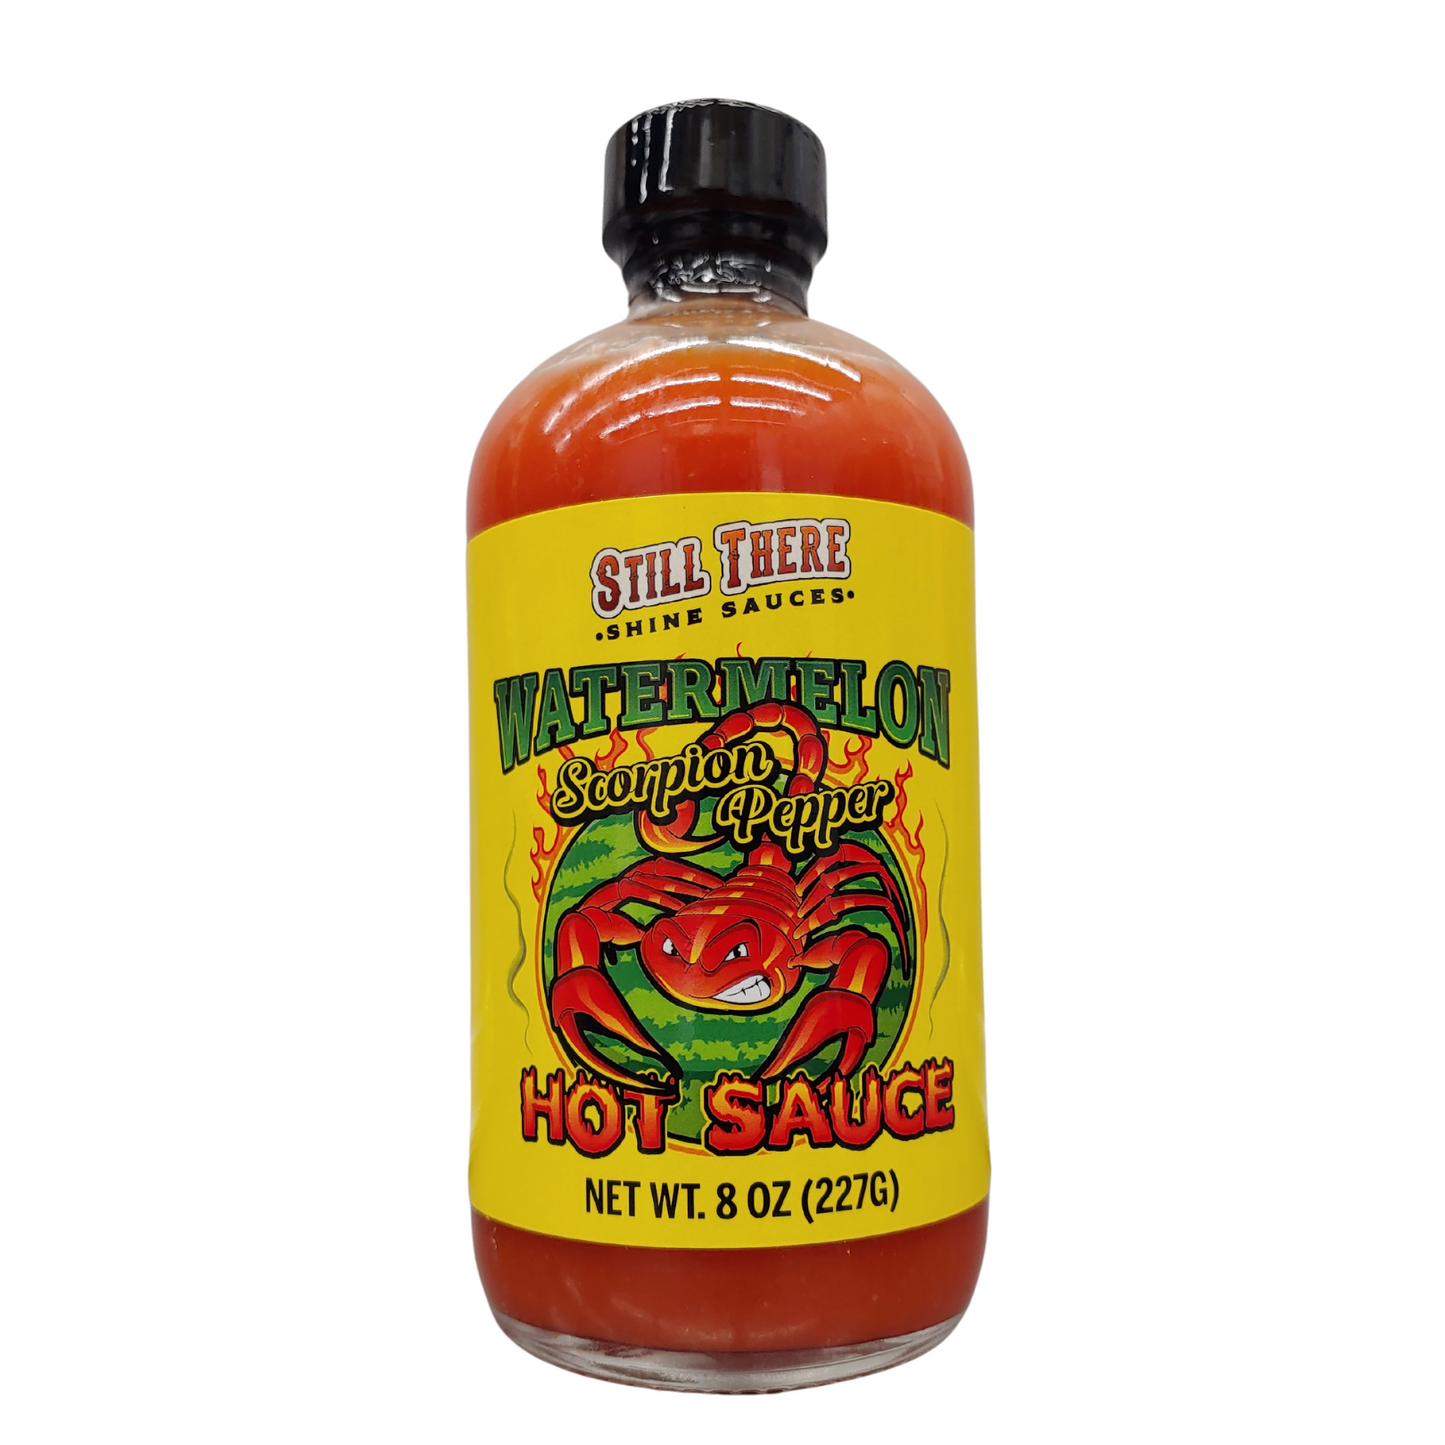 Watermelon Scorpion Hot Sauce